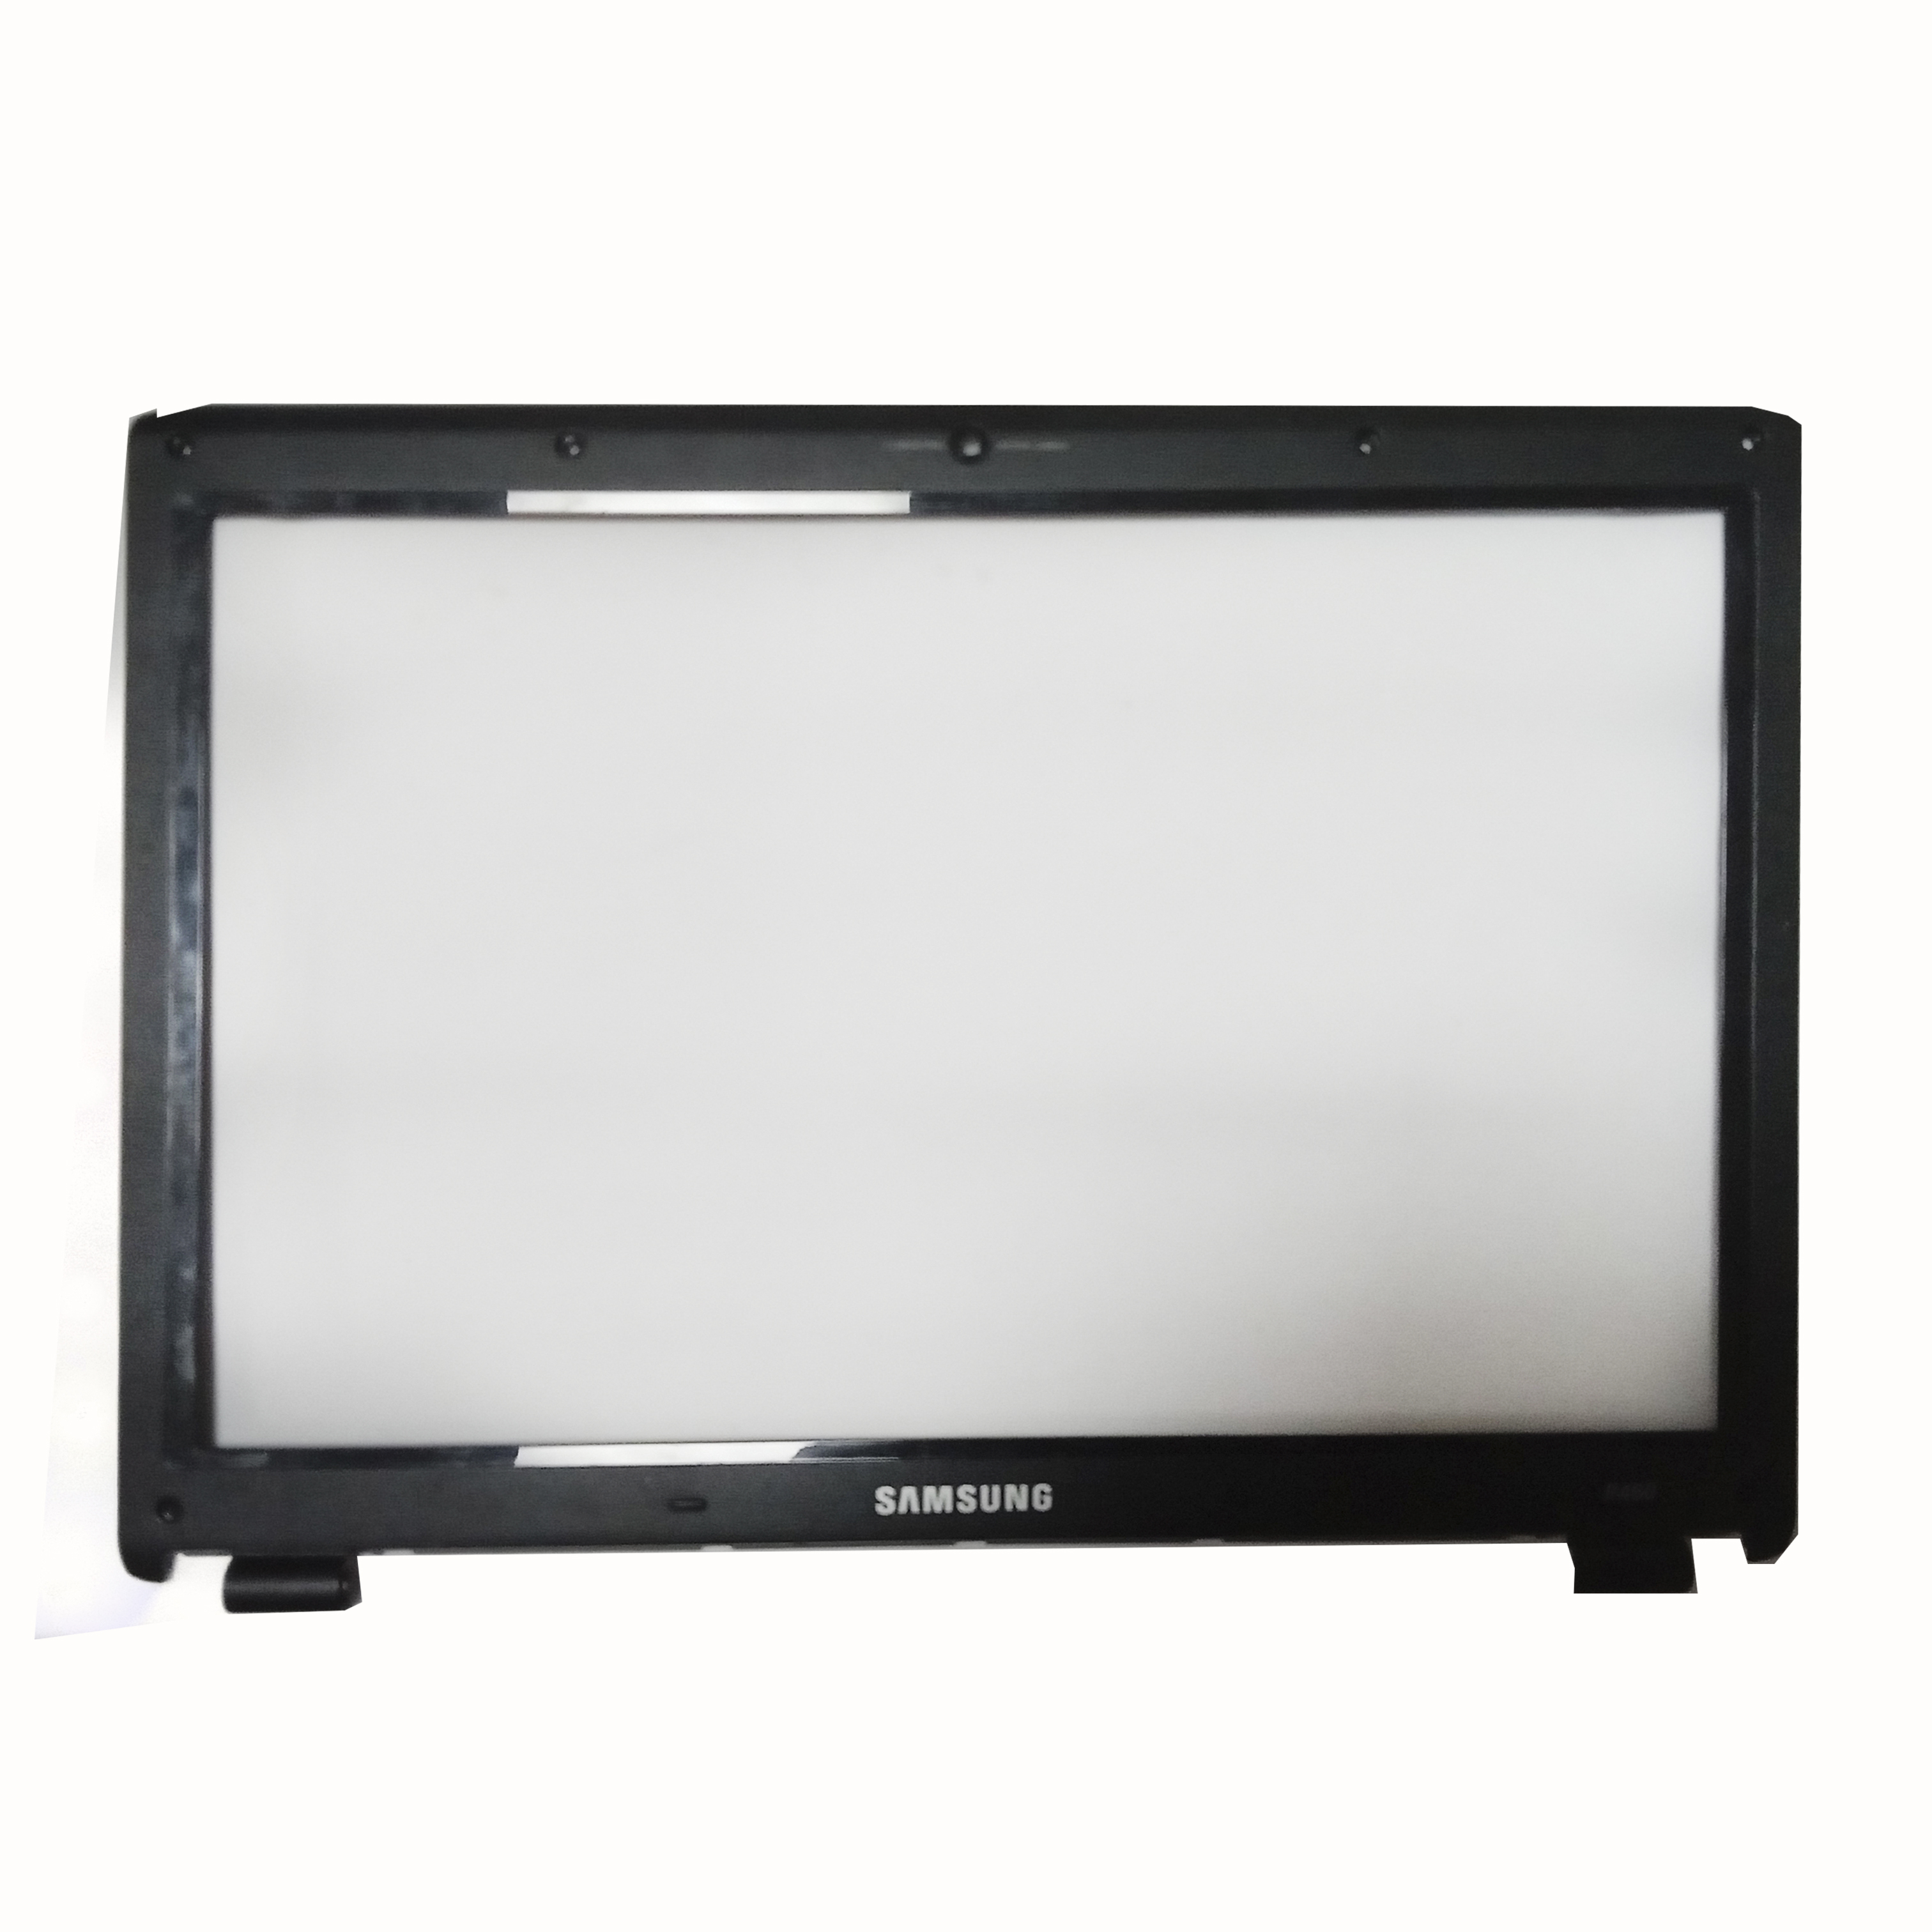 Деталь B корпуса ноутбука Samsung R410/R460 бу